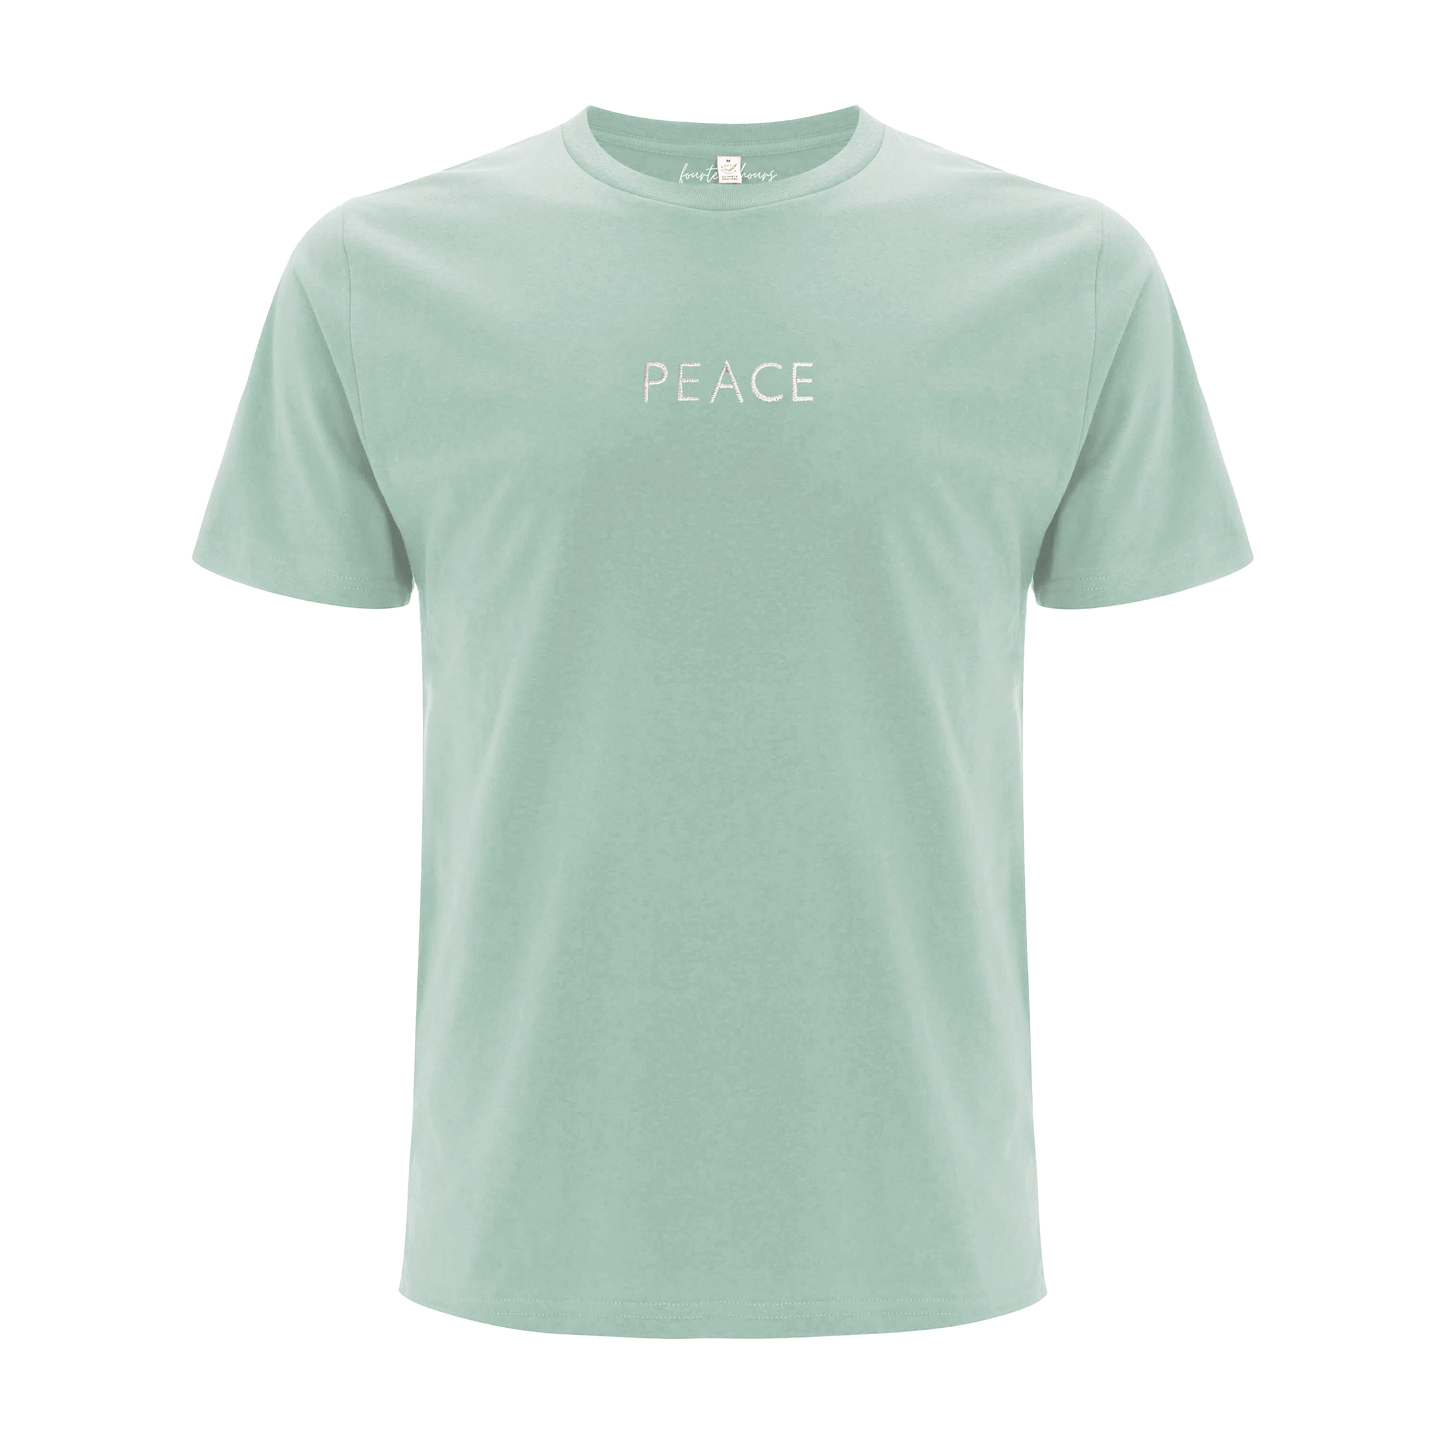 Unisex Shirt PEACE sage green